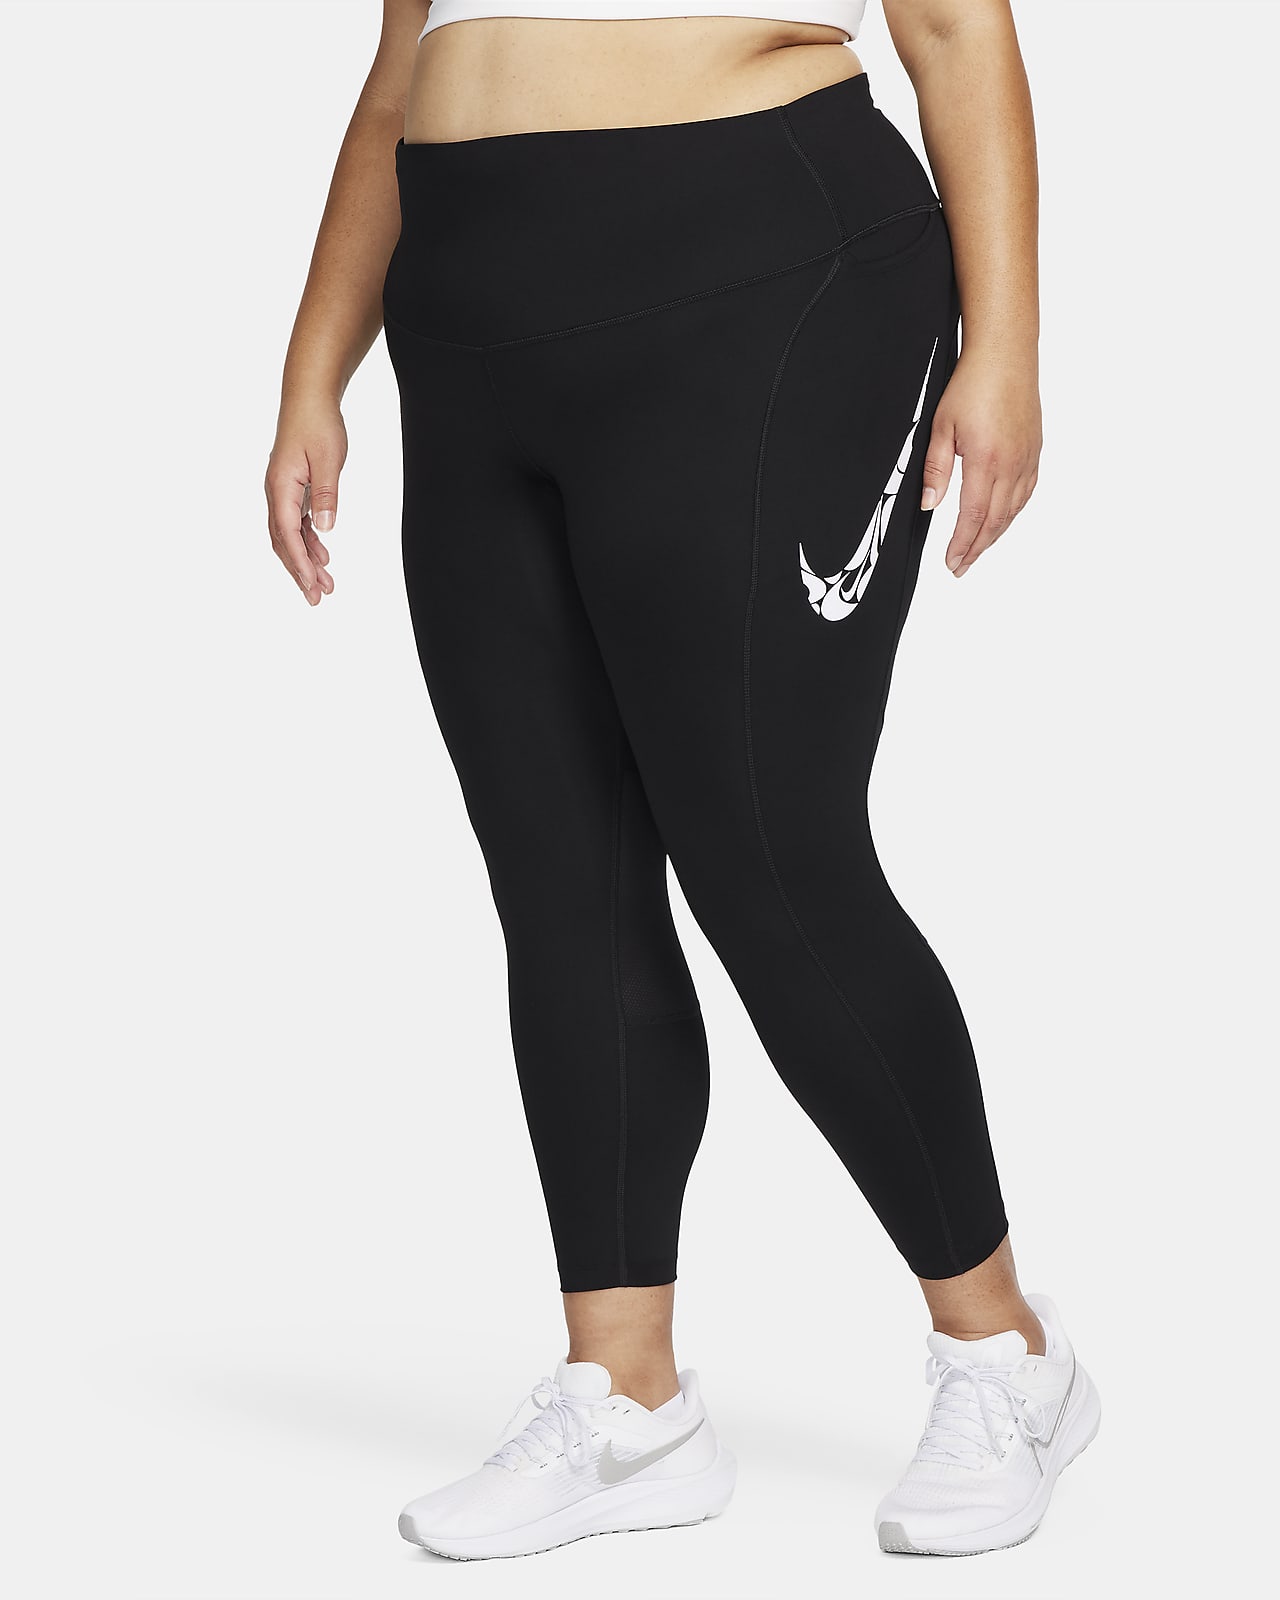 Legging de running 7/8 taille mi-basse avec poches Nike Fast pour femme (grande taille)